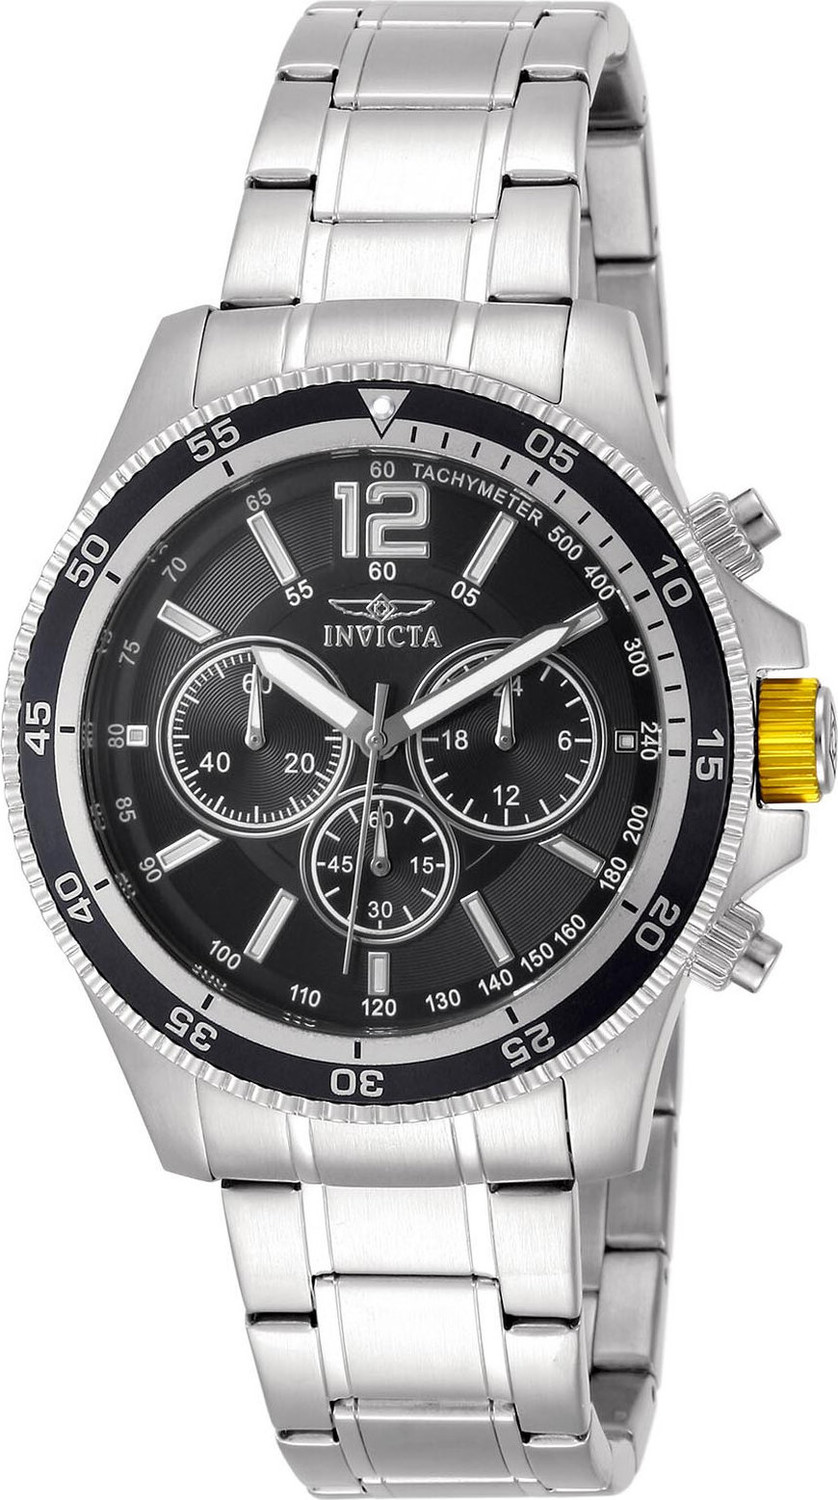 Hodinky Invicta Watch Specjality 13973 Silver